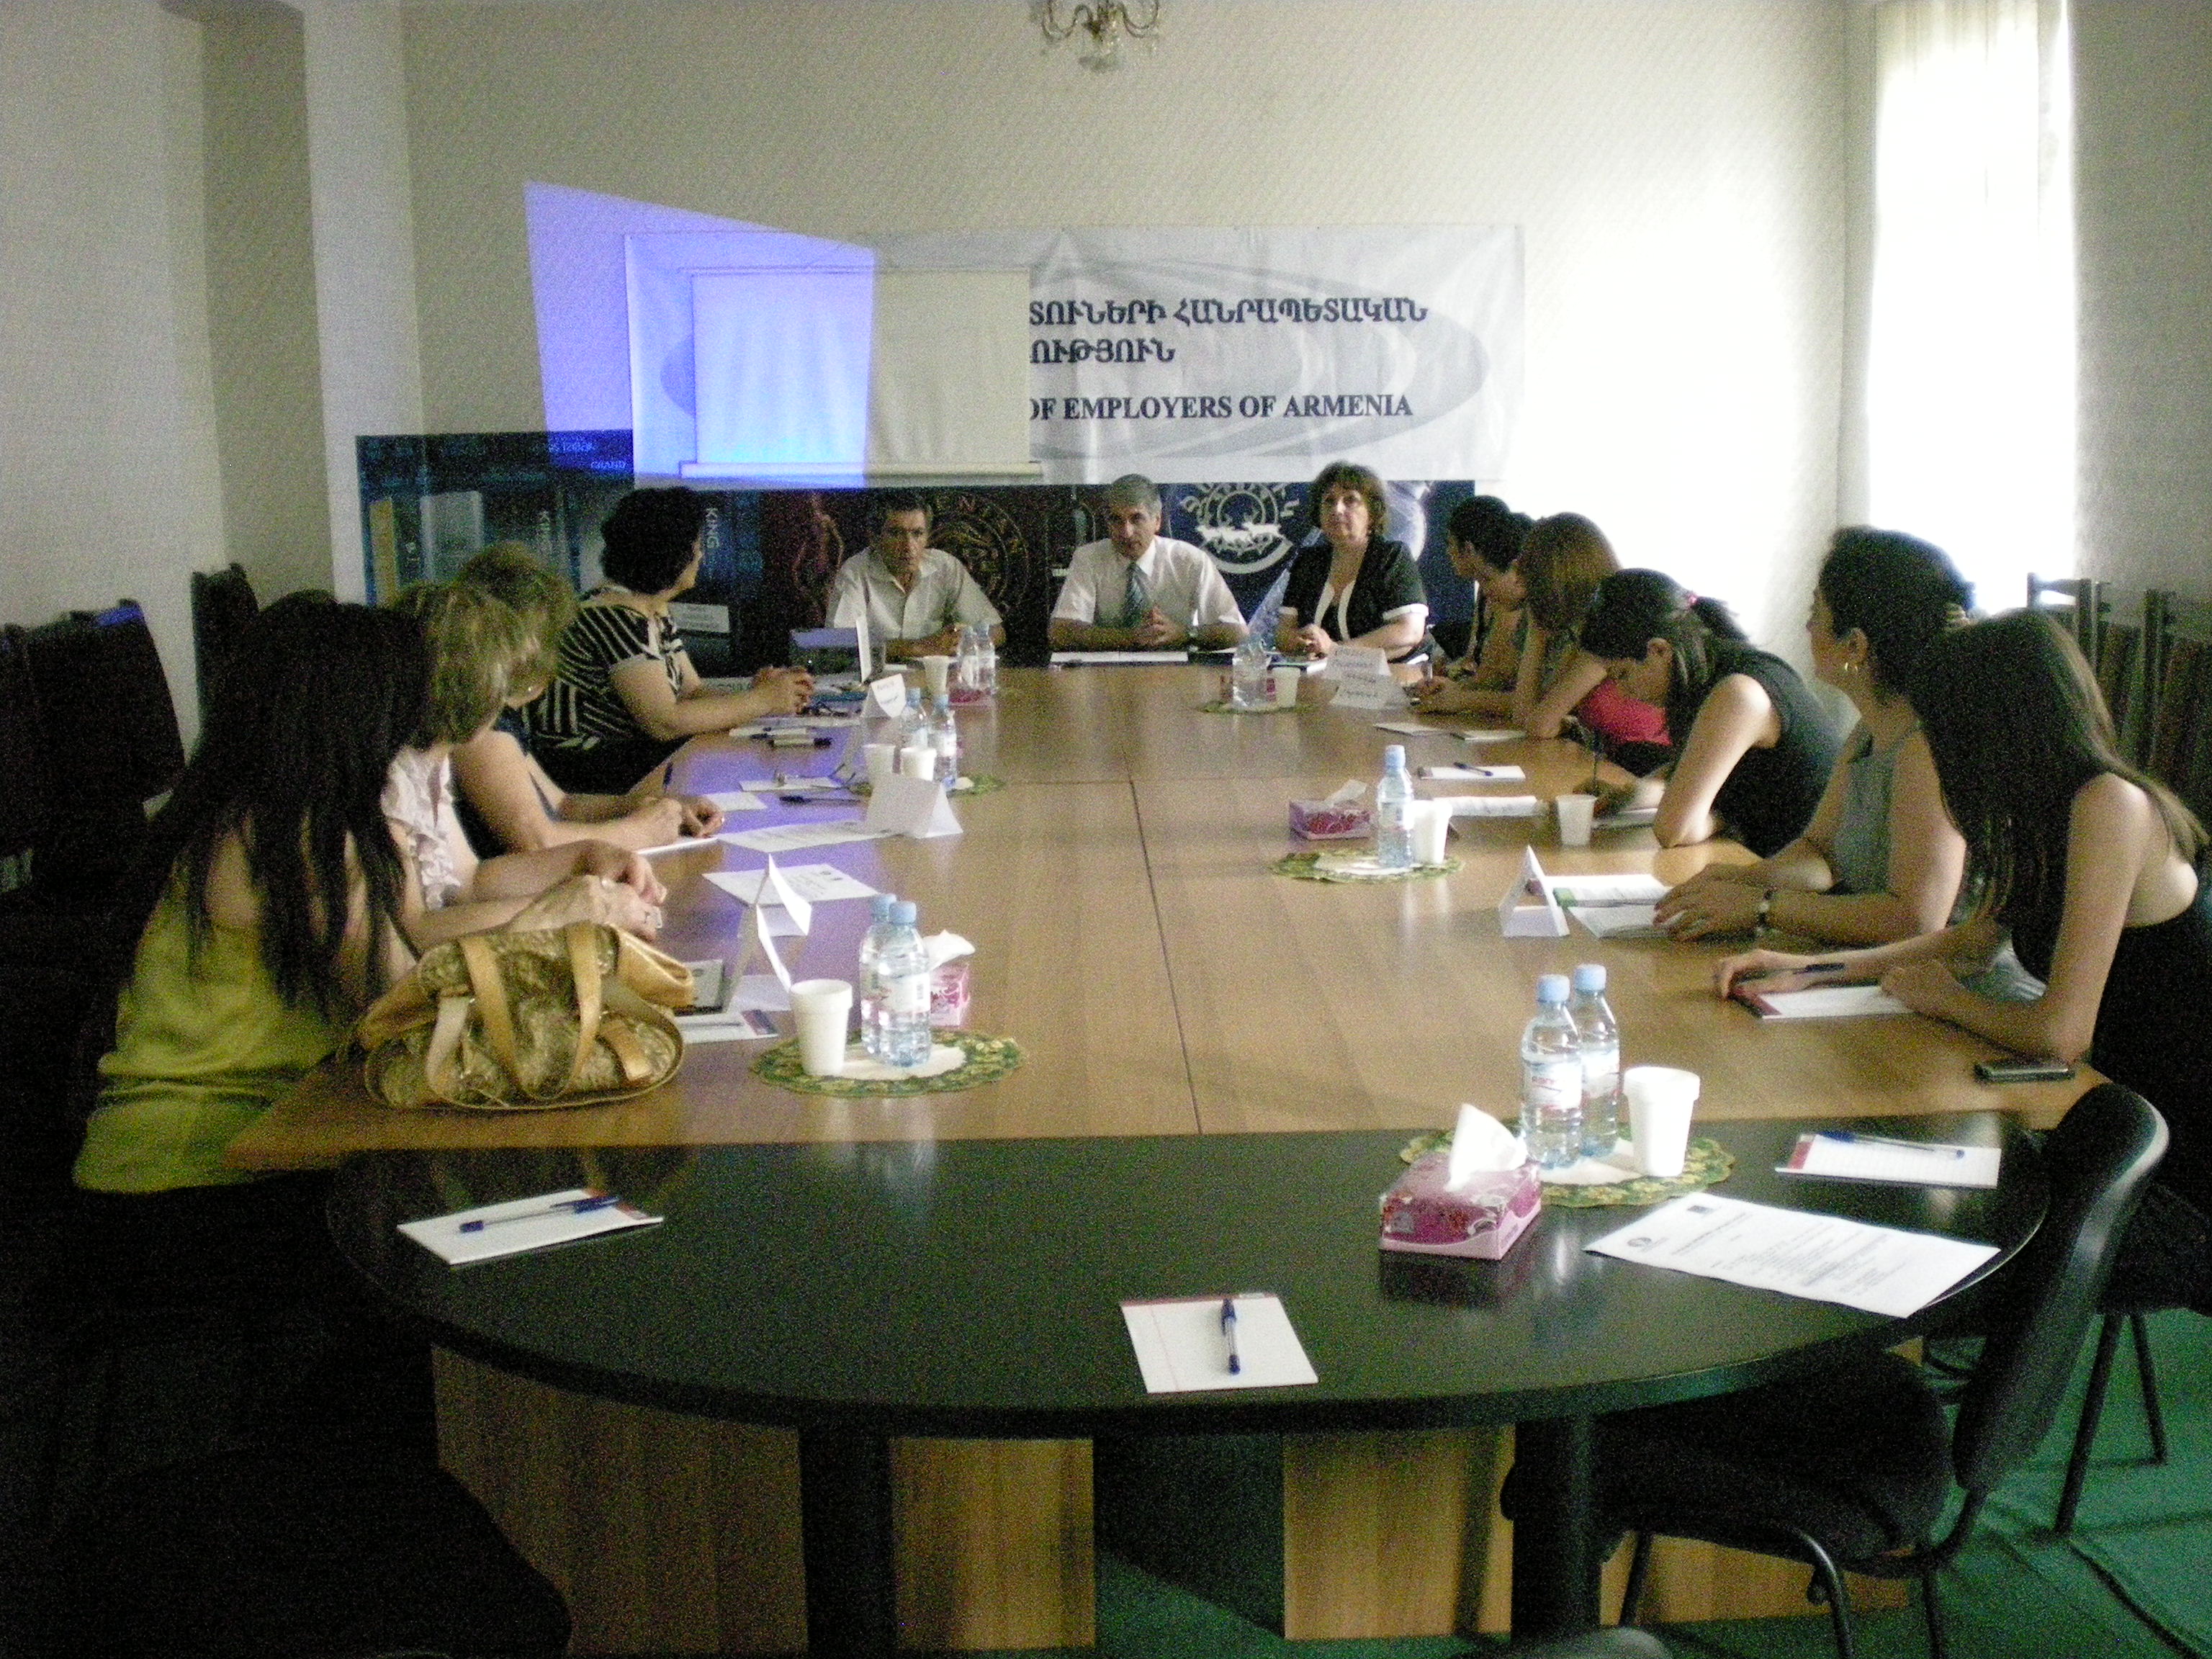 Meeting of the Republic Employers Union of Armenia in the scope of Women Entrepreneurship Development Program